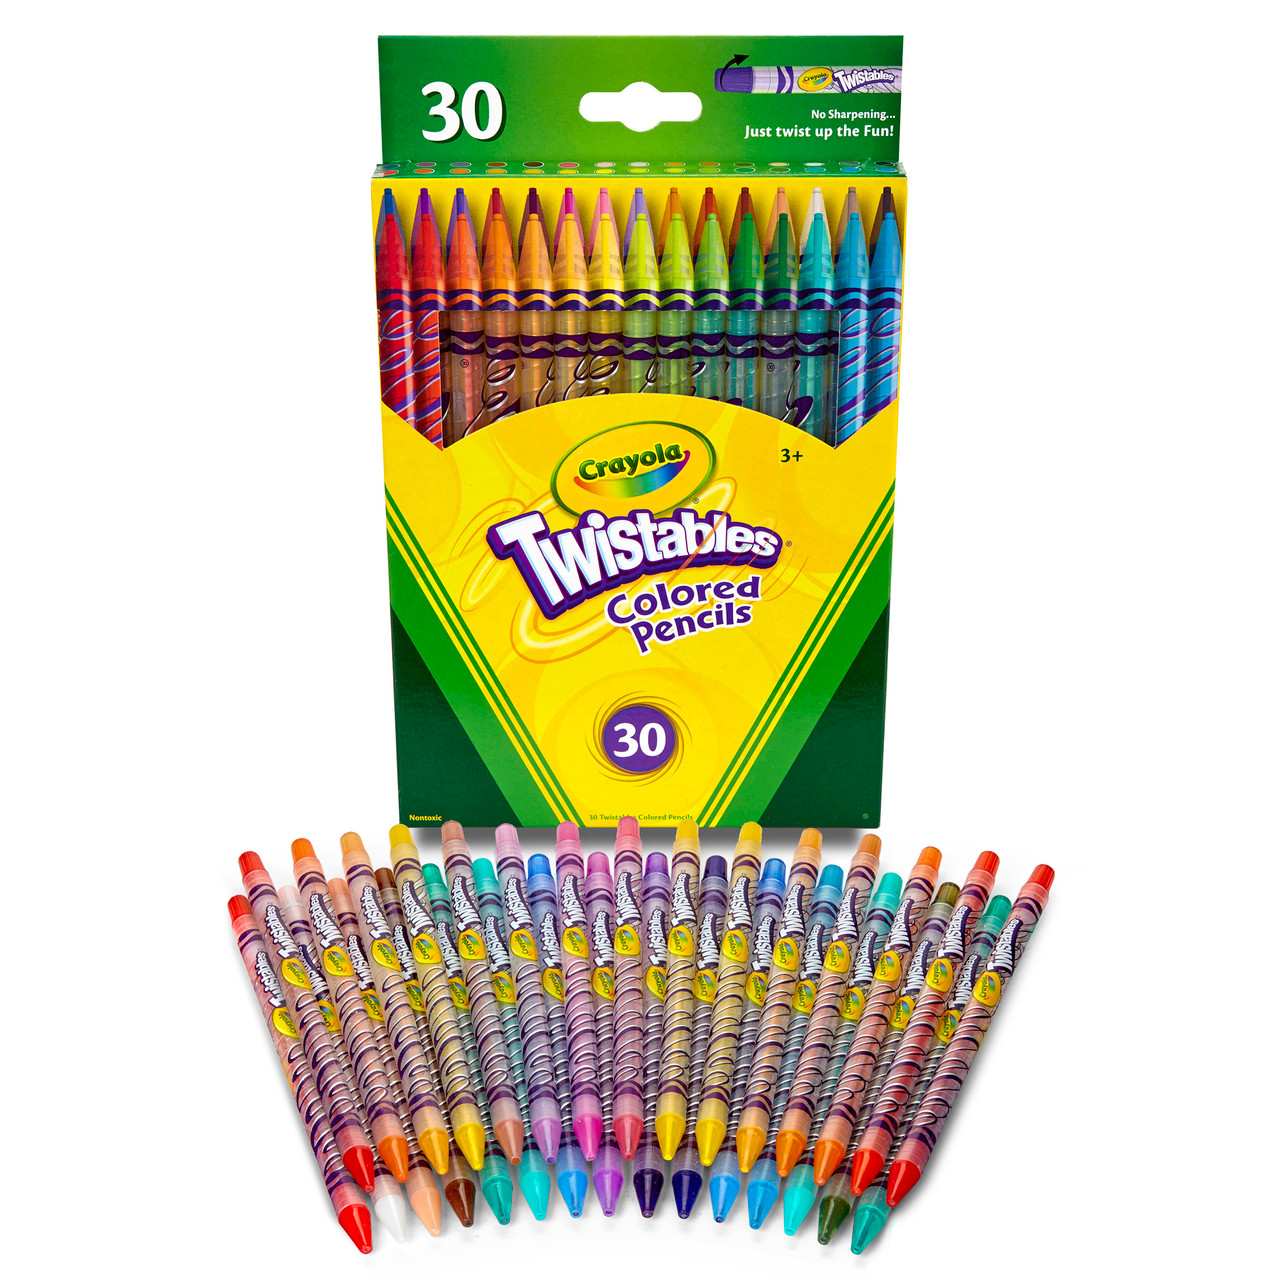 Crayola Twistables Colored Pencils 30 Ct. per Box (Set of 2 Boxes)